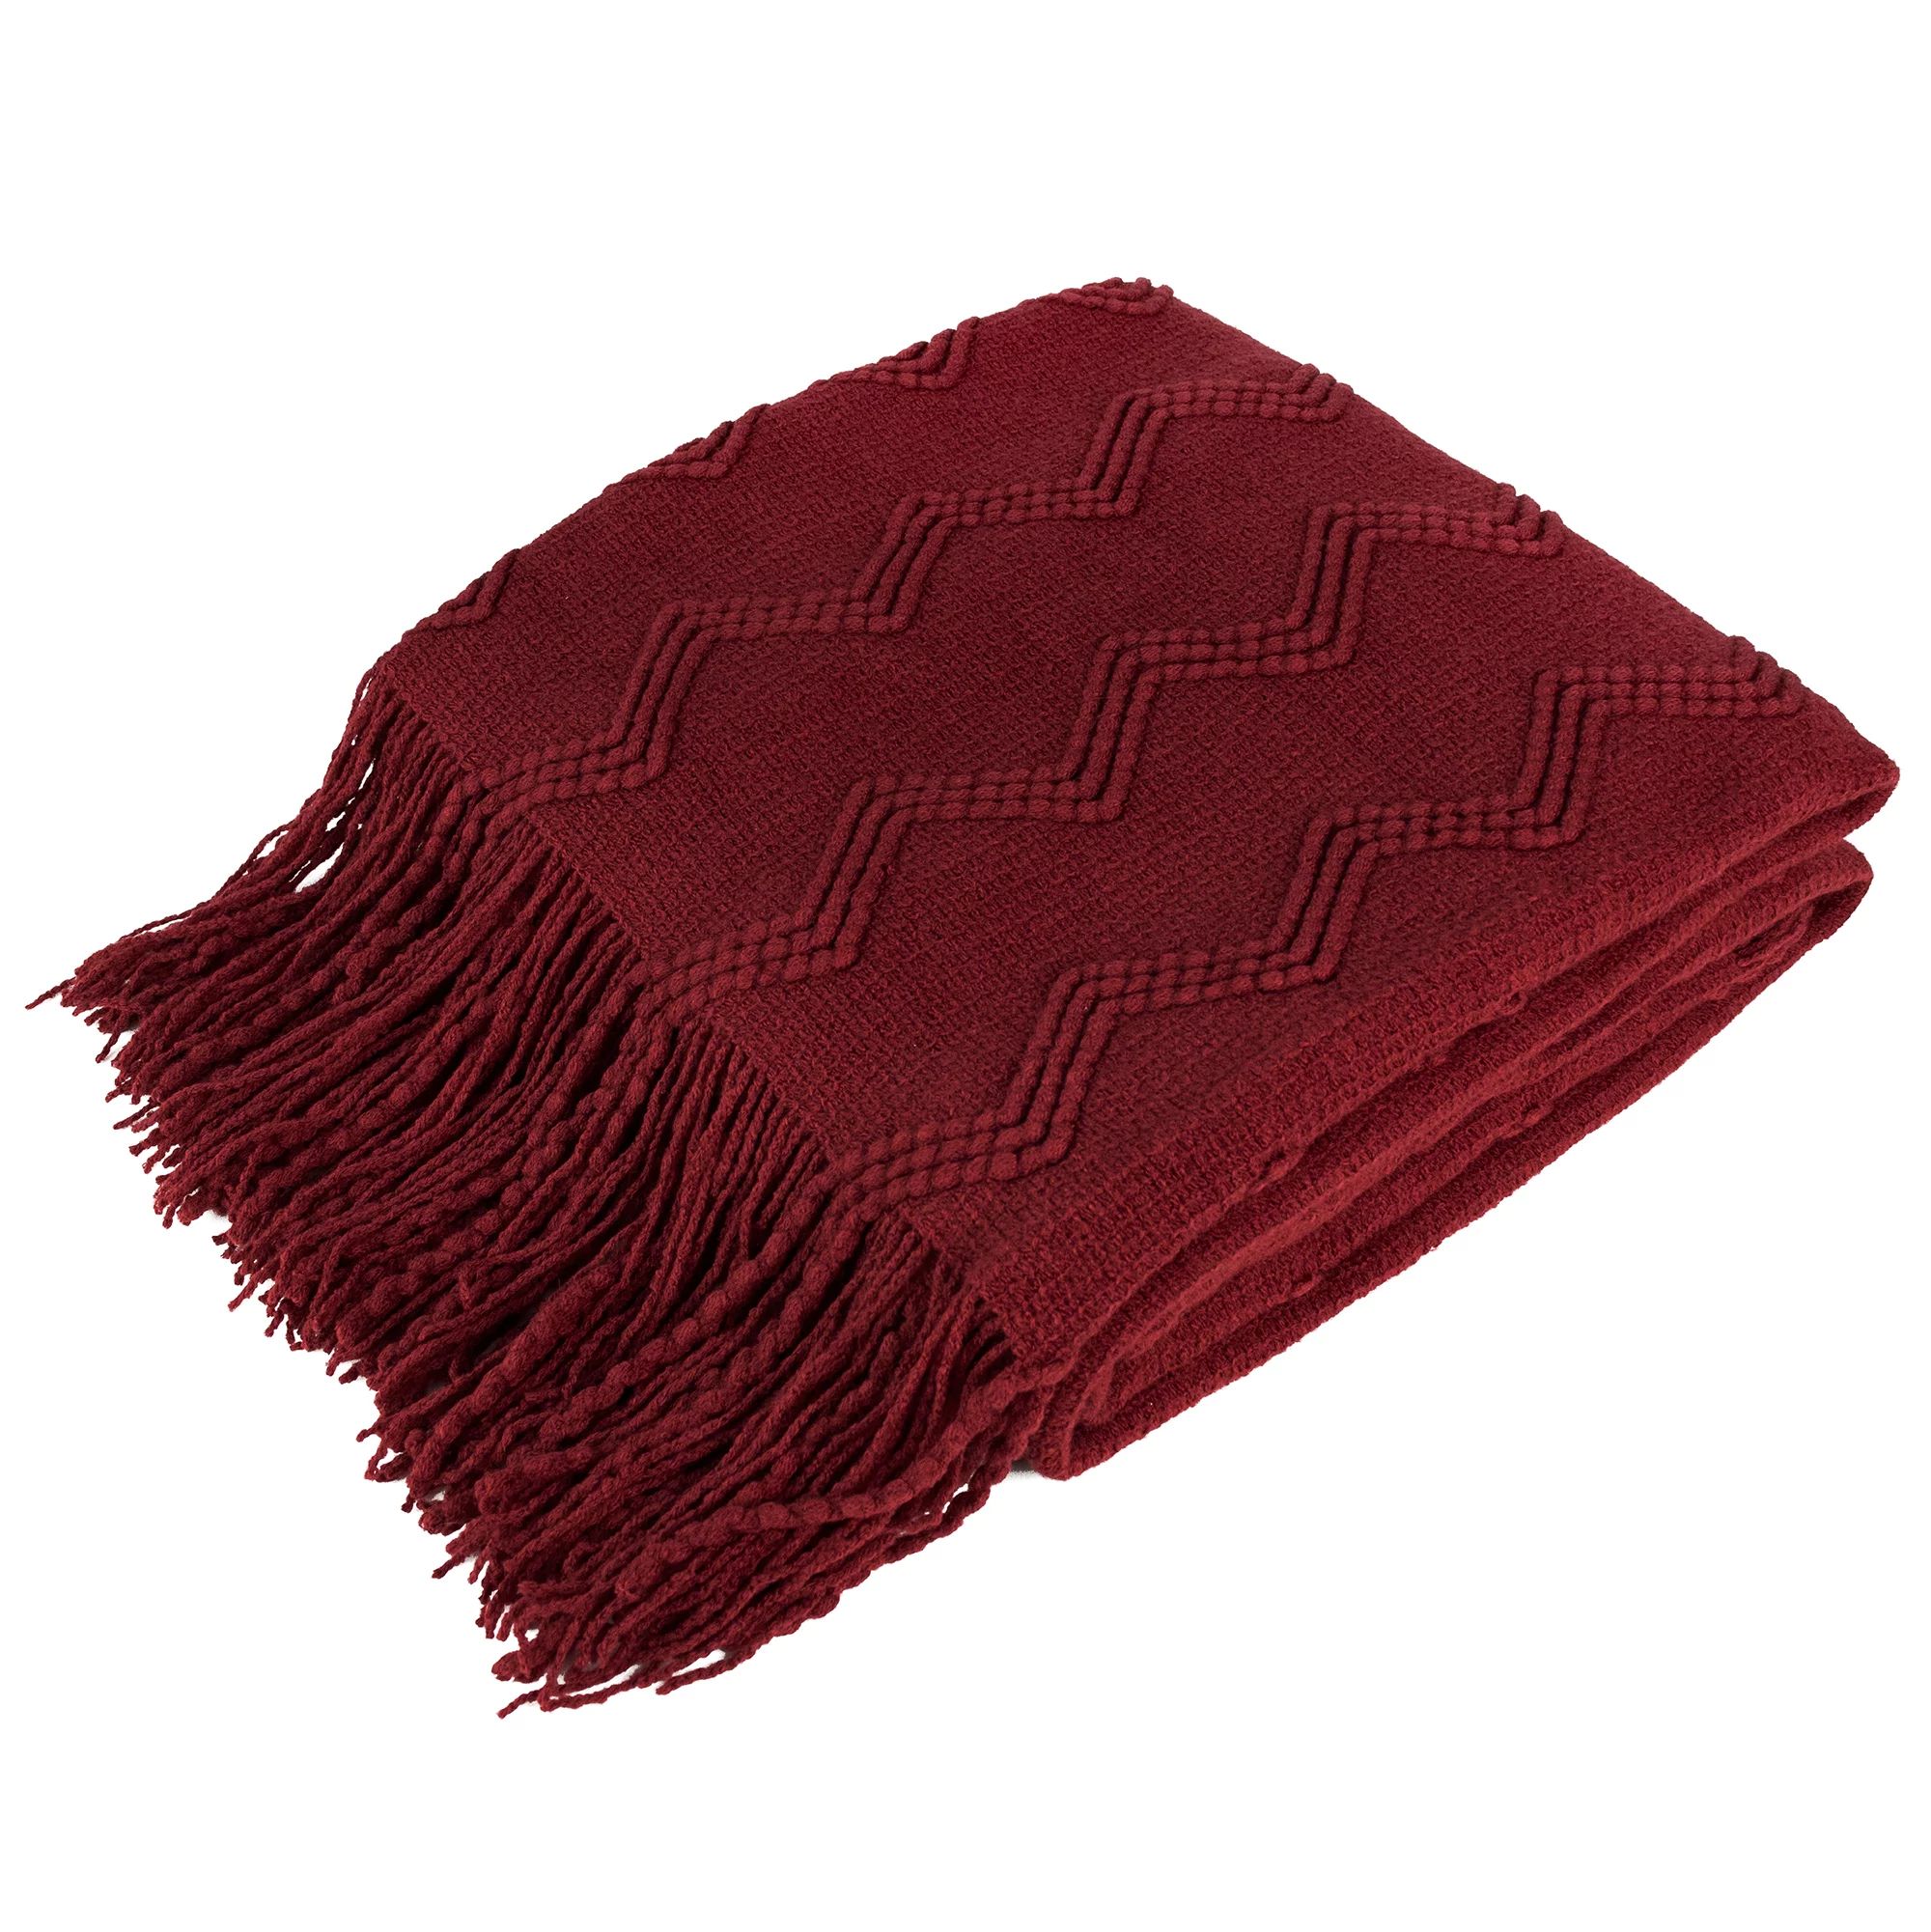 PAVILIA Knitted Throw Blanket Fringe Dark Red Wine Burgundy | Decorative Tassel Boho Farmhouse De... | Walmart (US)